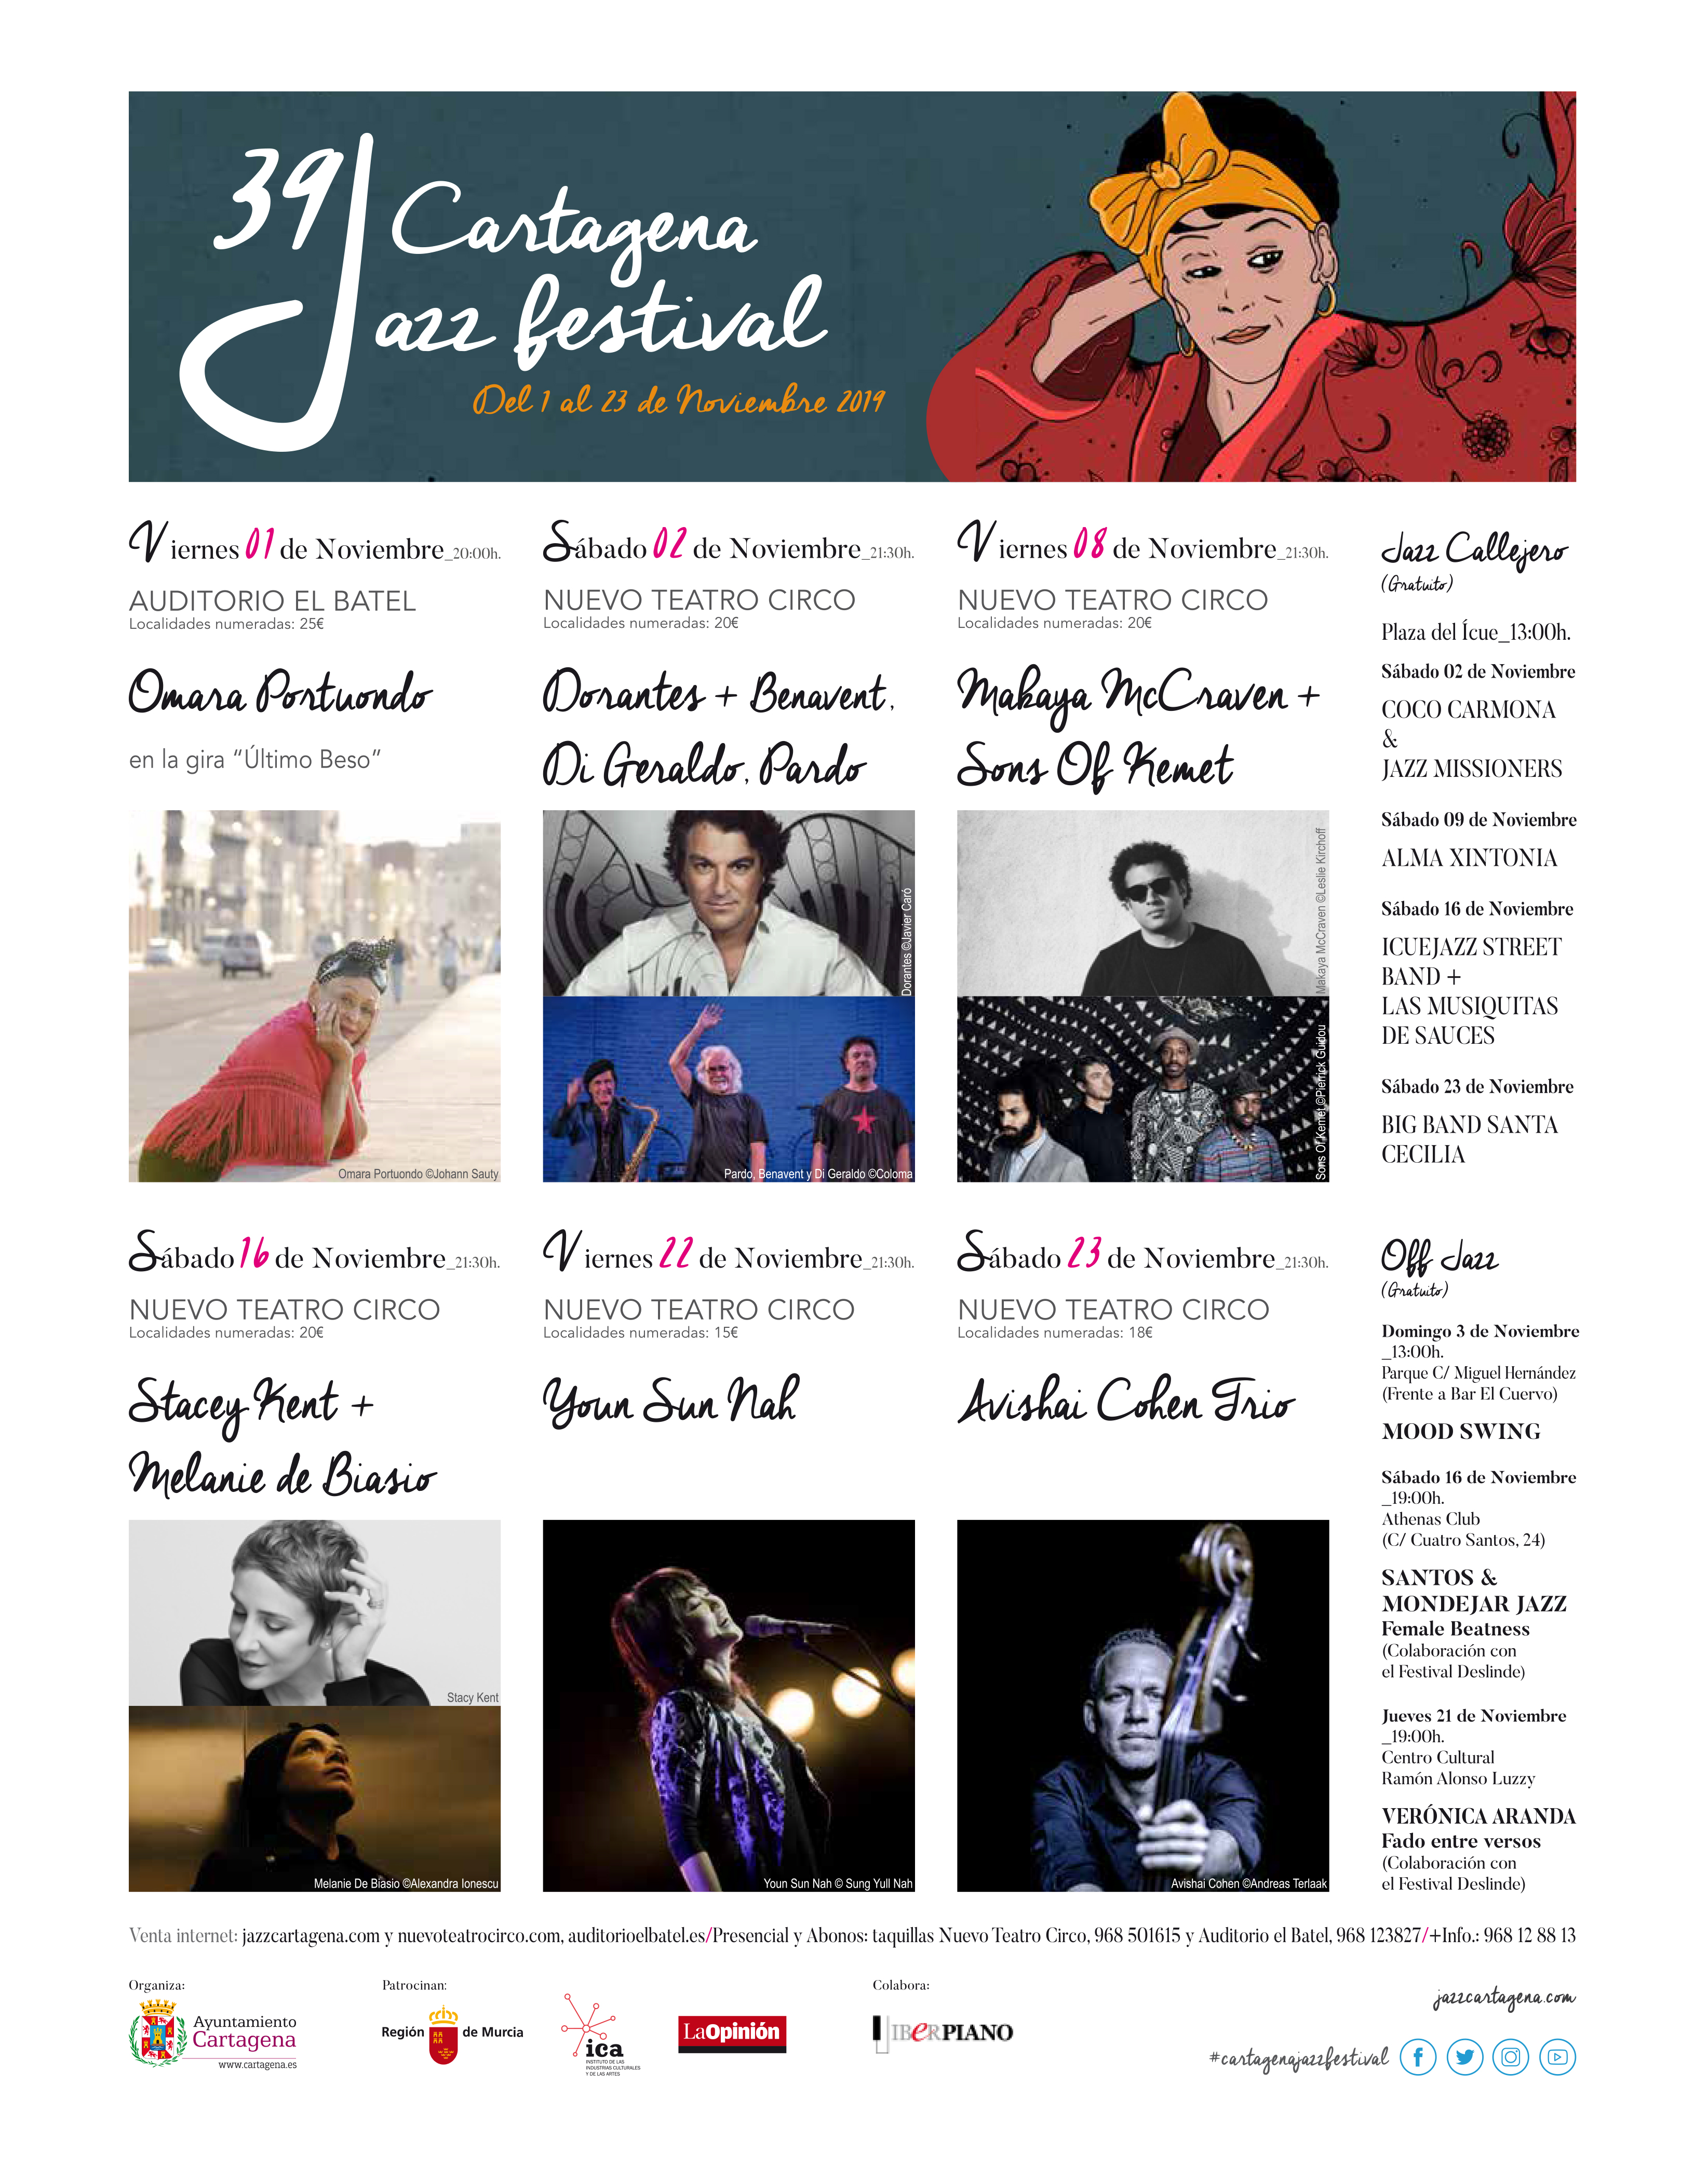 Programa del 39º Cartagena Jazz Festival 2019